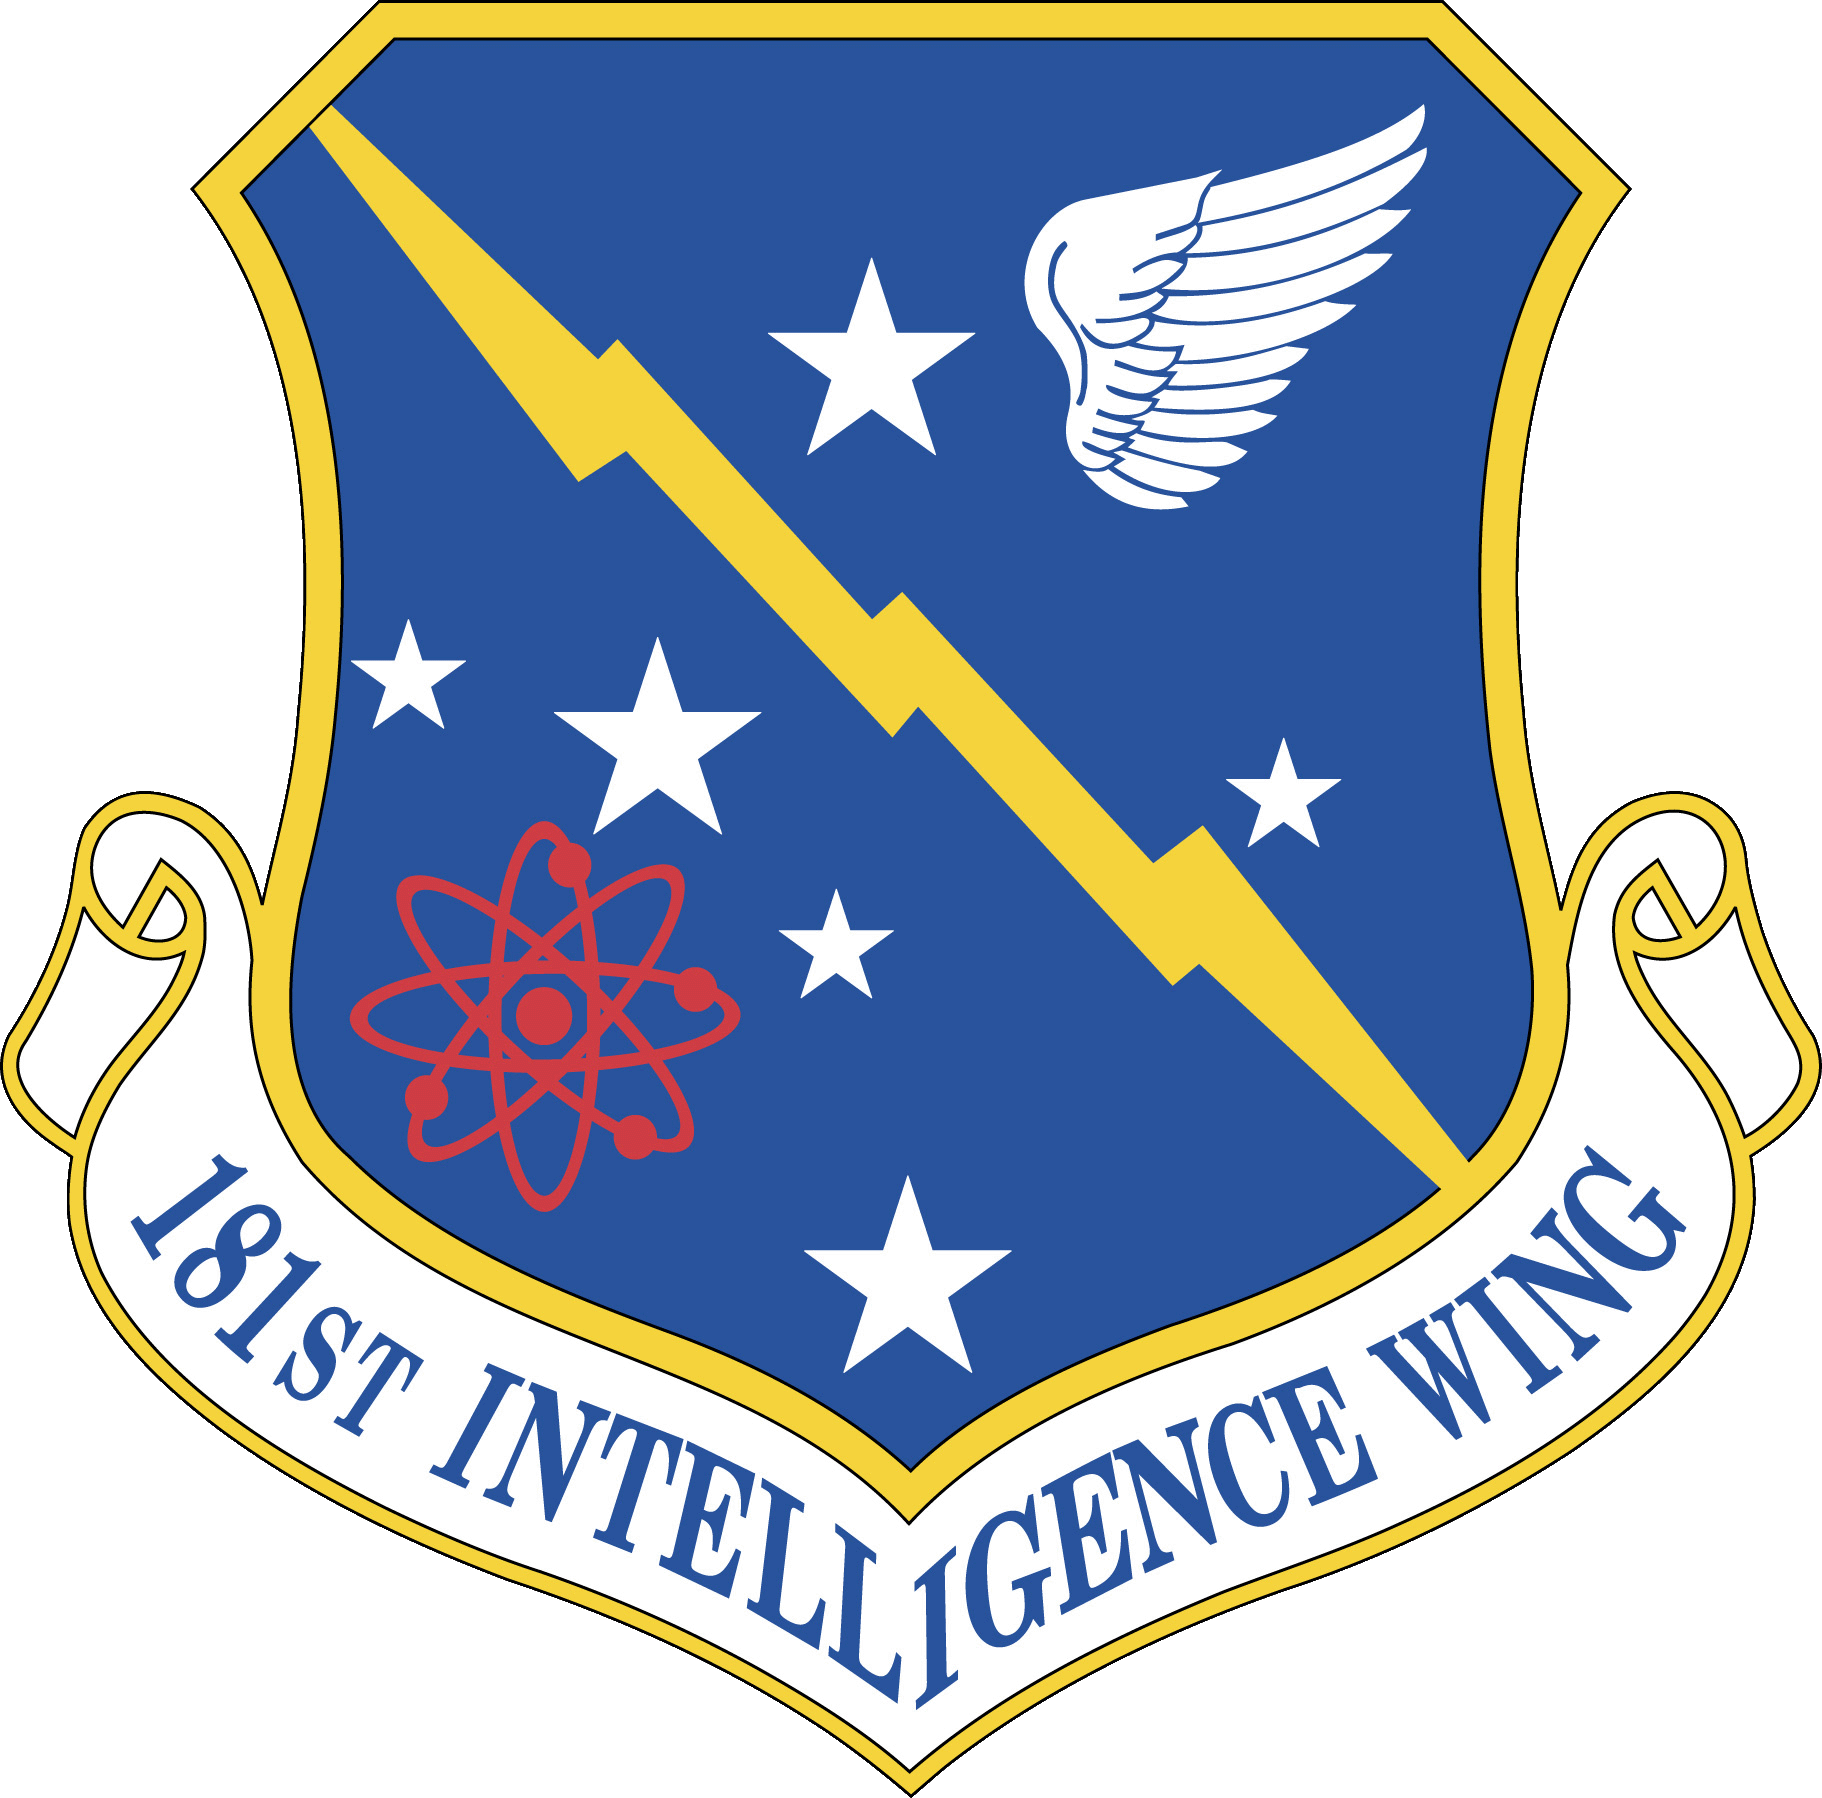 181st Intelligence Wing